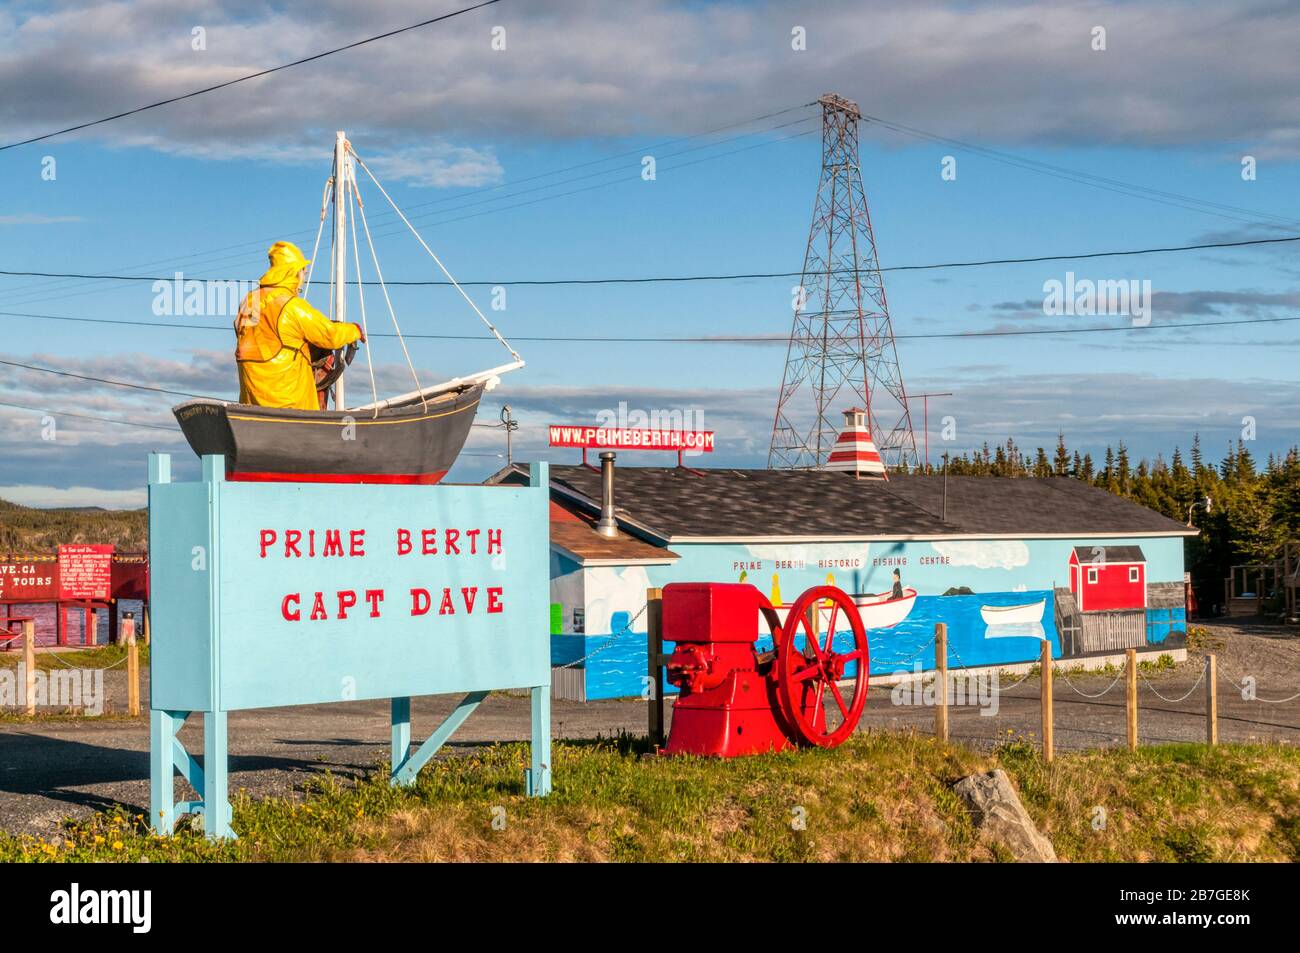 The Prime Berth fishery & heritage centre, near Twillingate, Newfoundland. Stock Photo